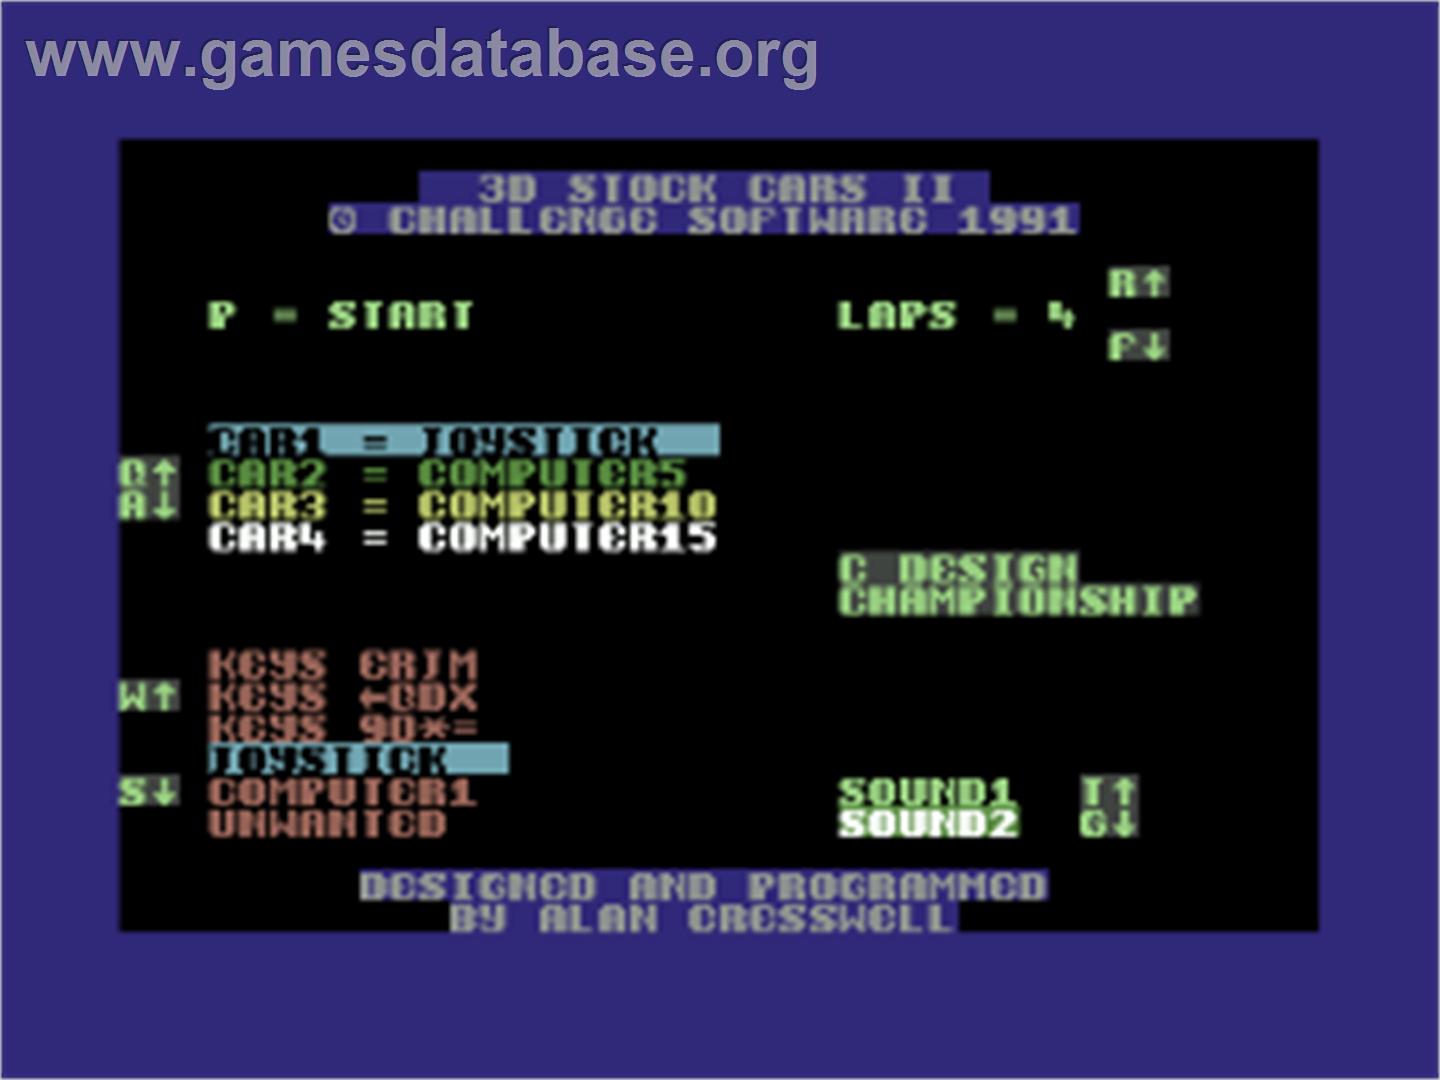 3D Stock Cars II - Commodore 64 - Artwork - Title Screen